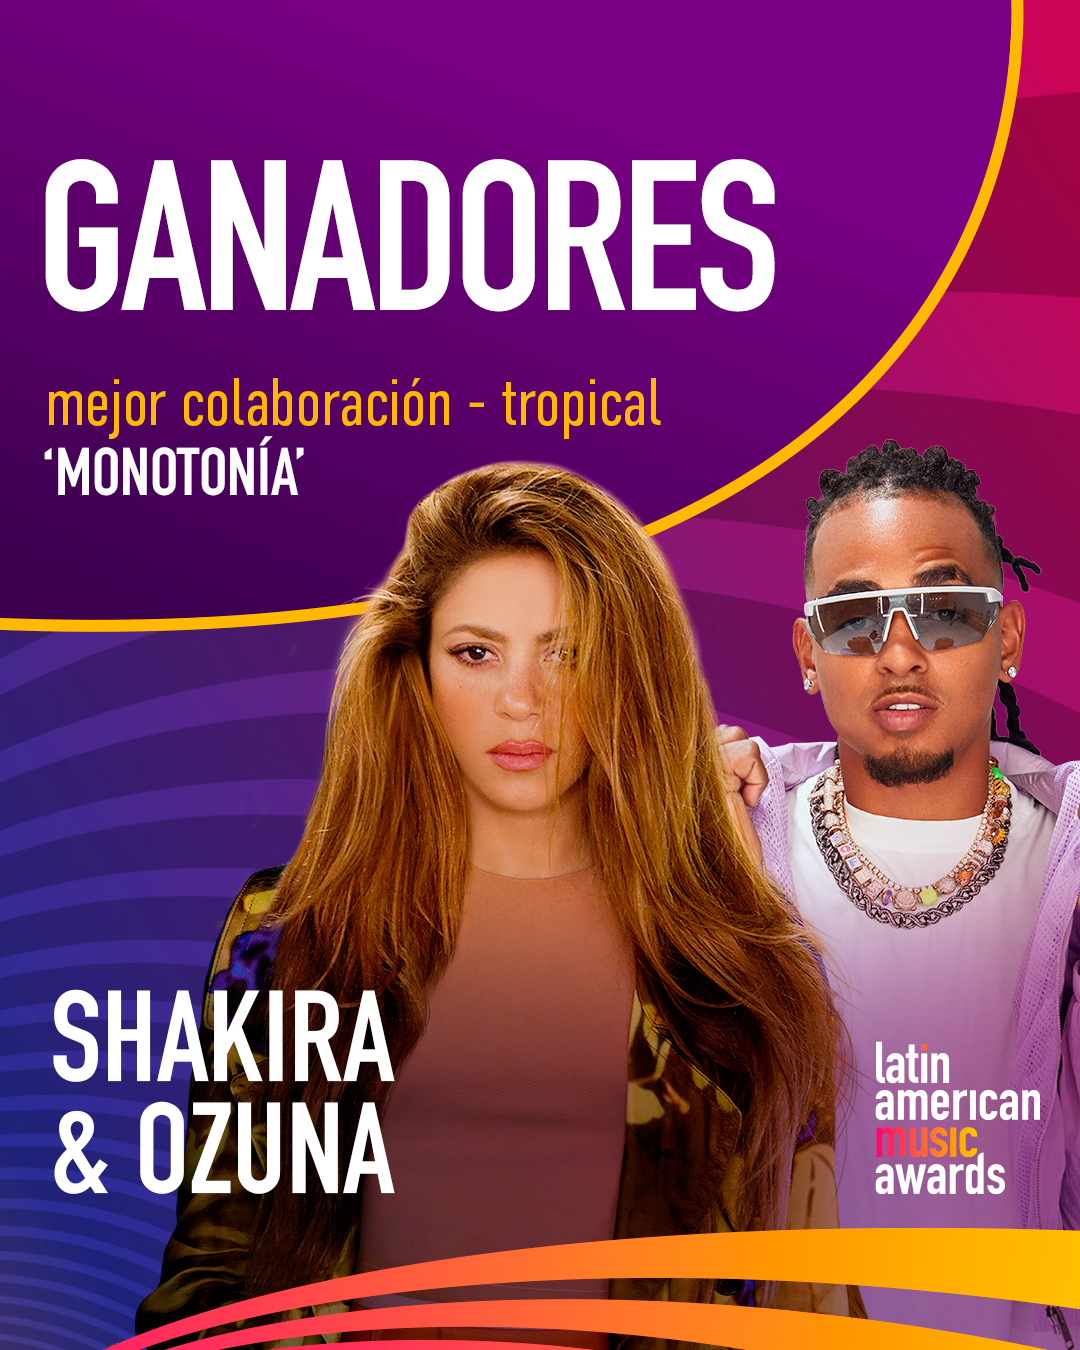 Shakira Colombia Fan Club Oficial (@FCShakiColombia) / Twitter